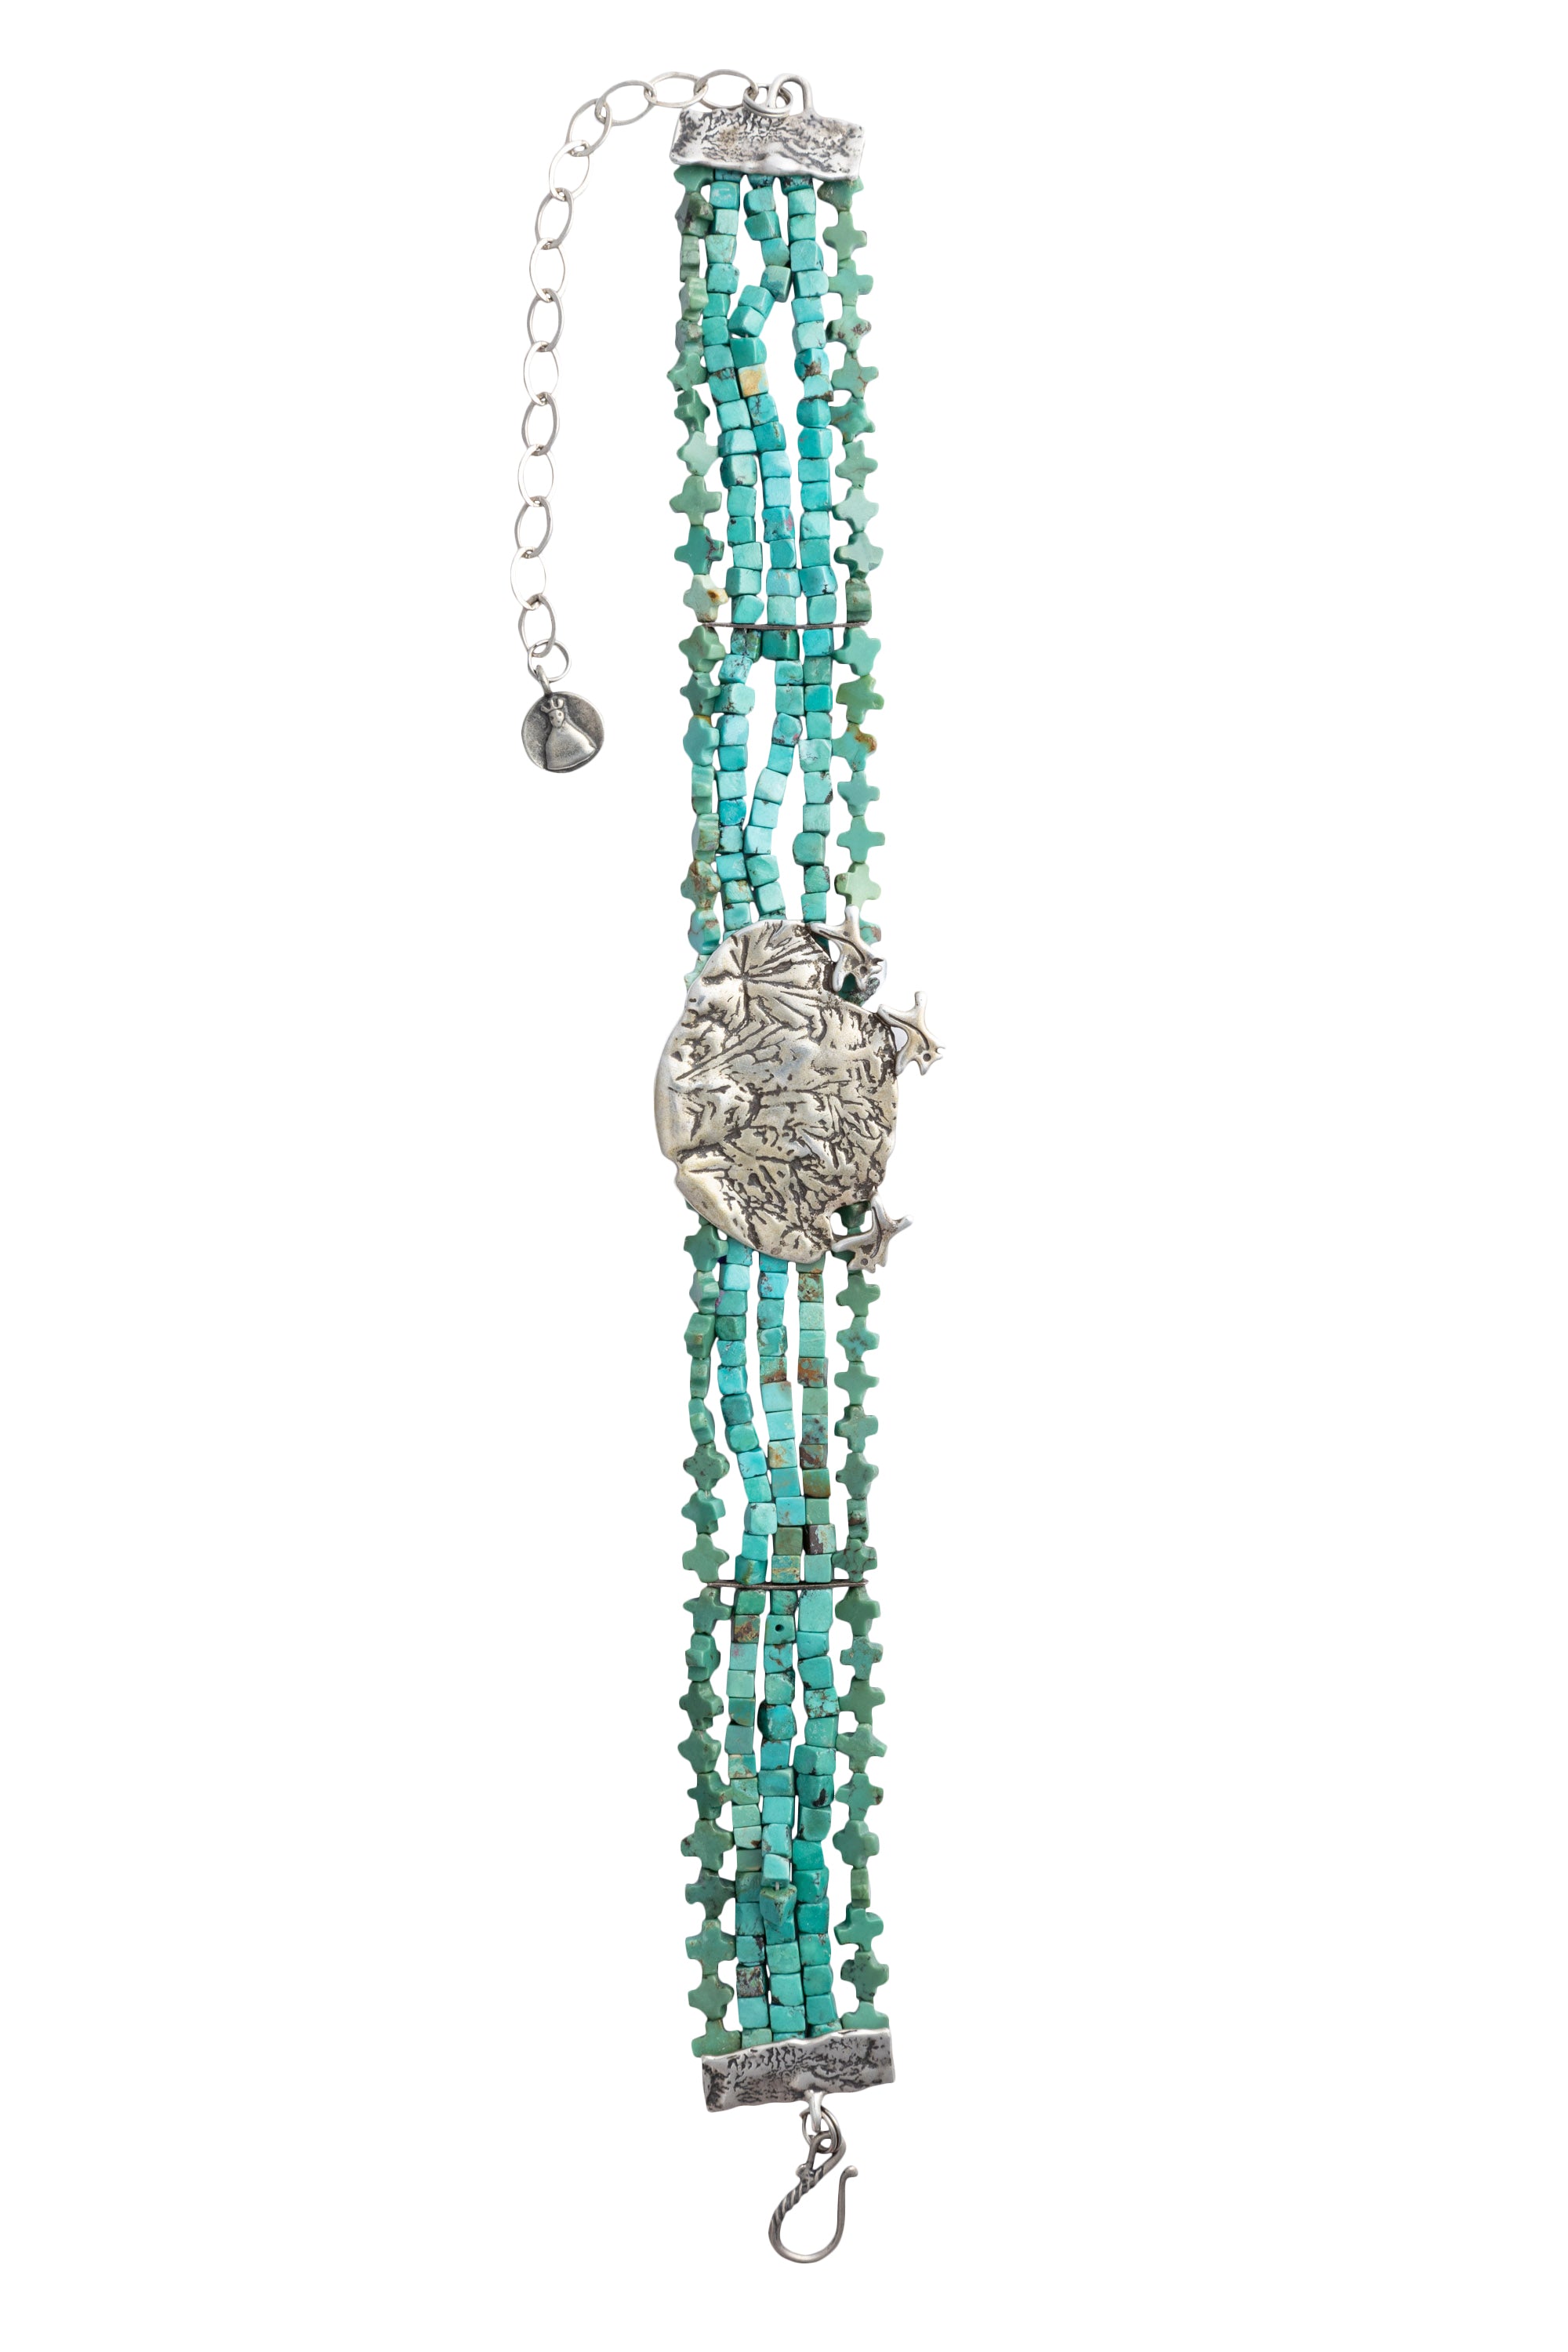 Necklace, Choker, Turquoise & Sterling, Hallmark, Vintage, 1683